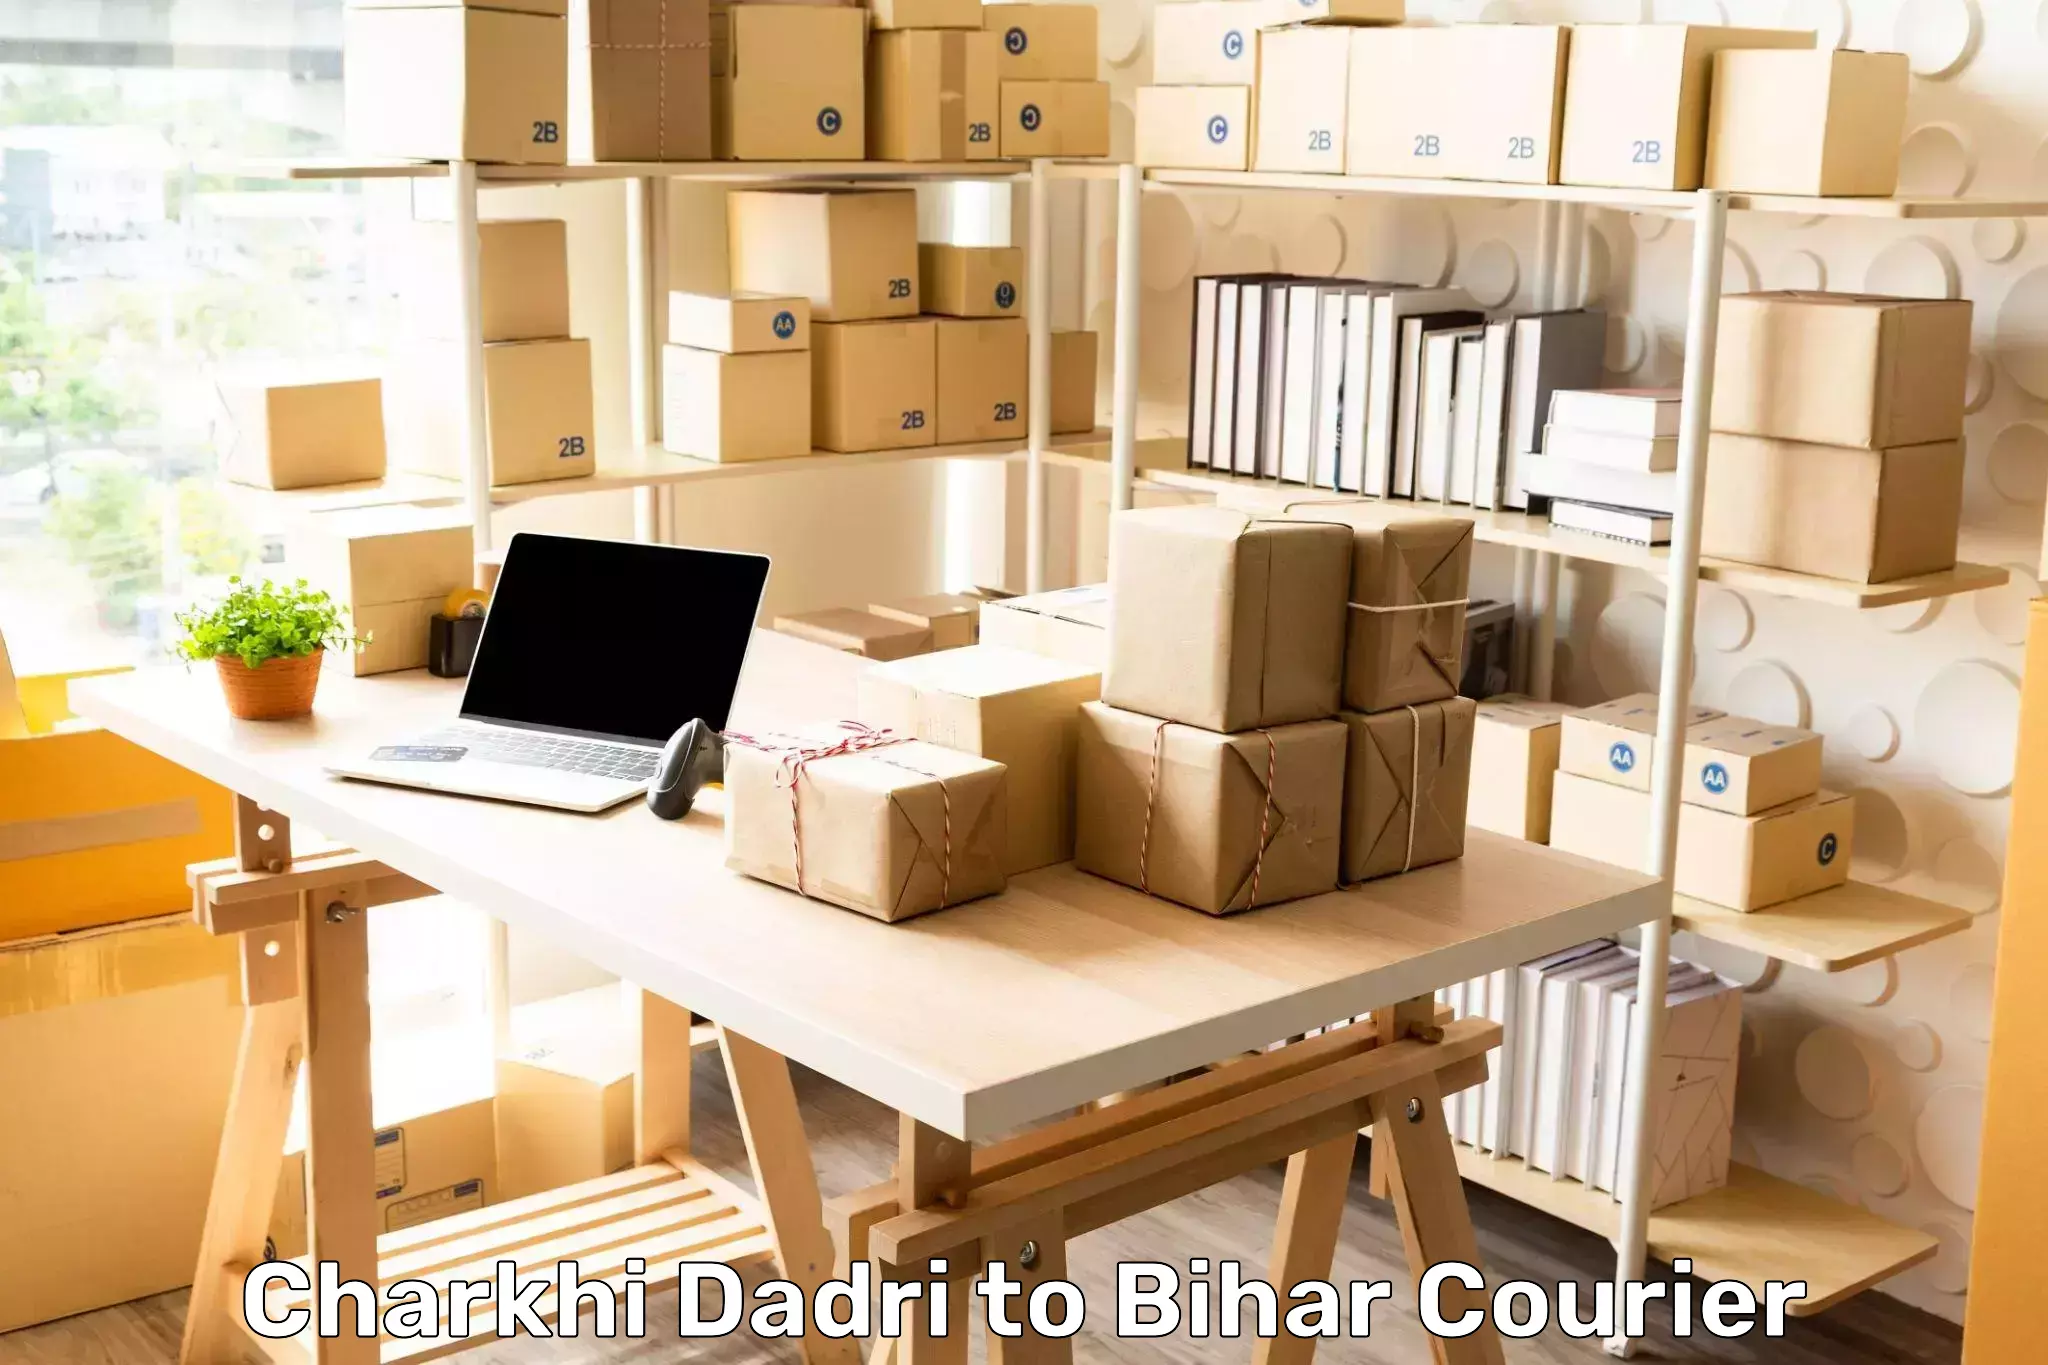 Professional courier services in Charkhi Dadri to Aurangabad Bihar